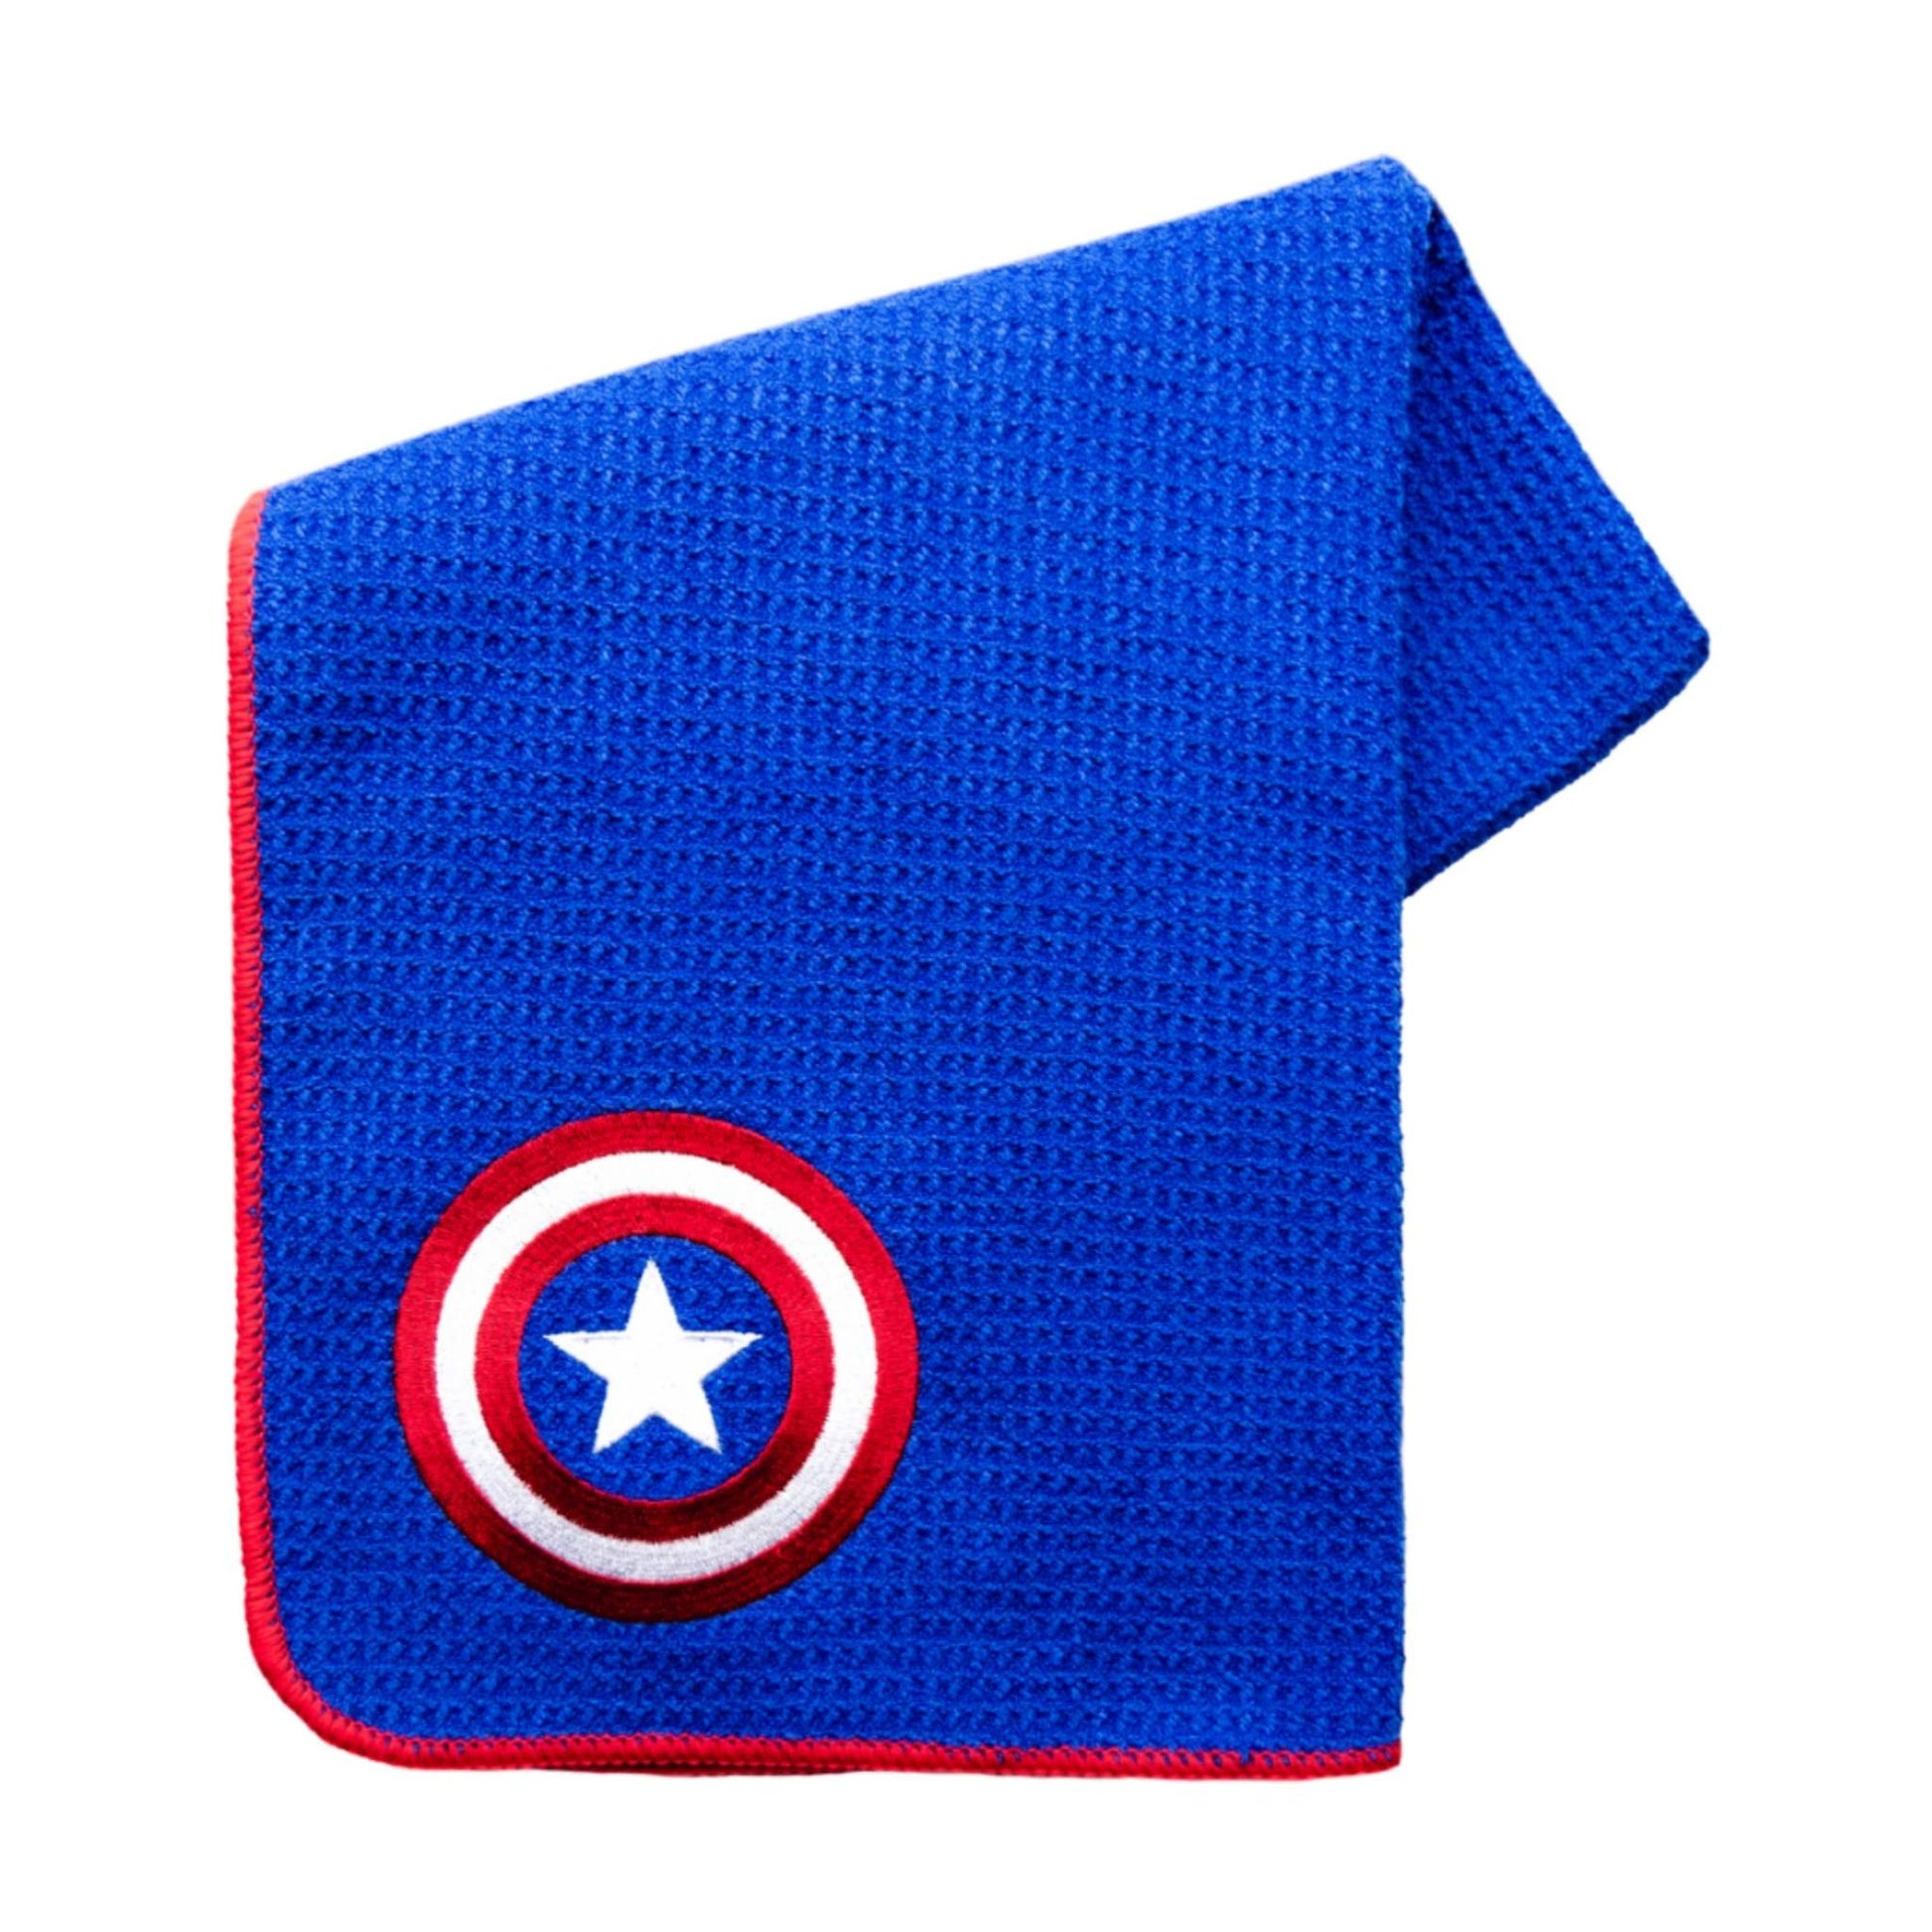 Performa - Performance Towel, Captain America, Team Perfect